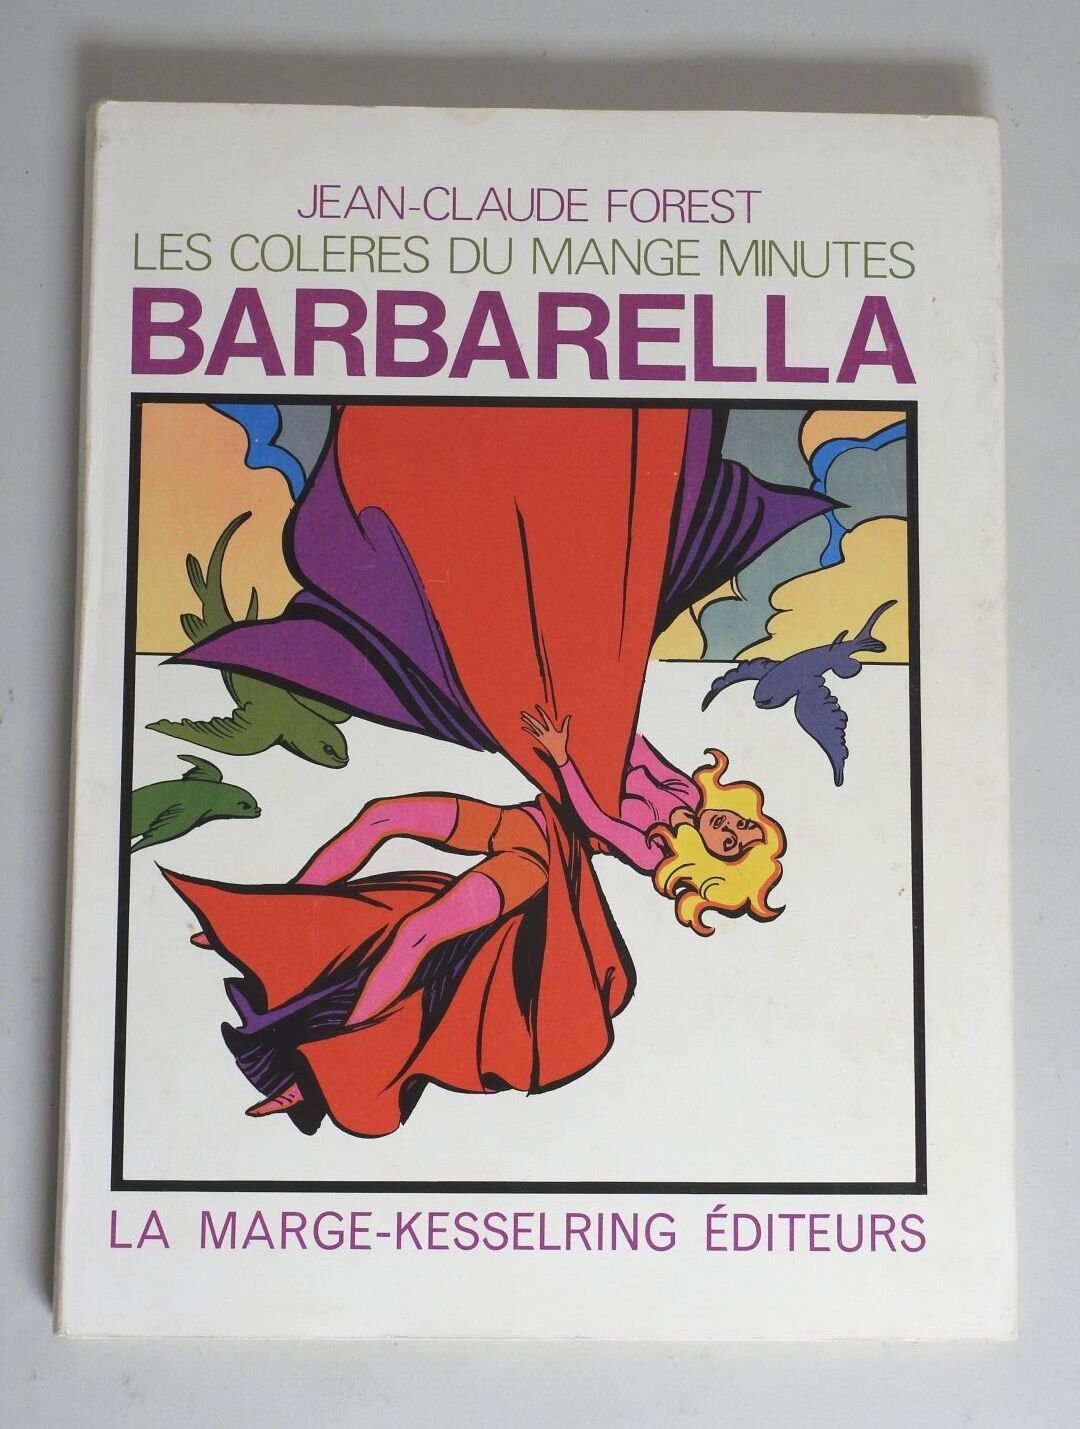 Forest, Barbarella Forest, Barbarella
Les colères du mange minutes
La Marge-Kess&hellip;